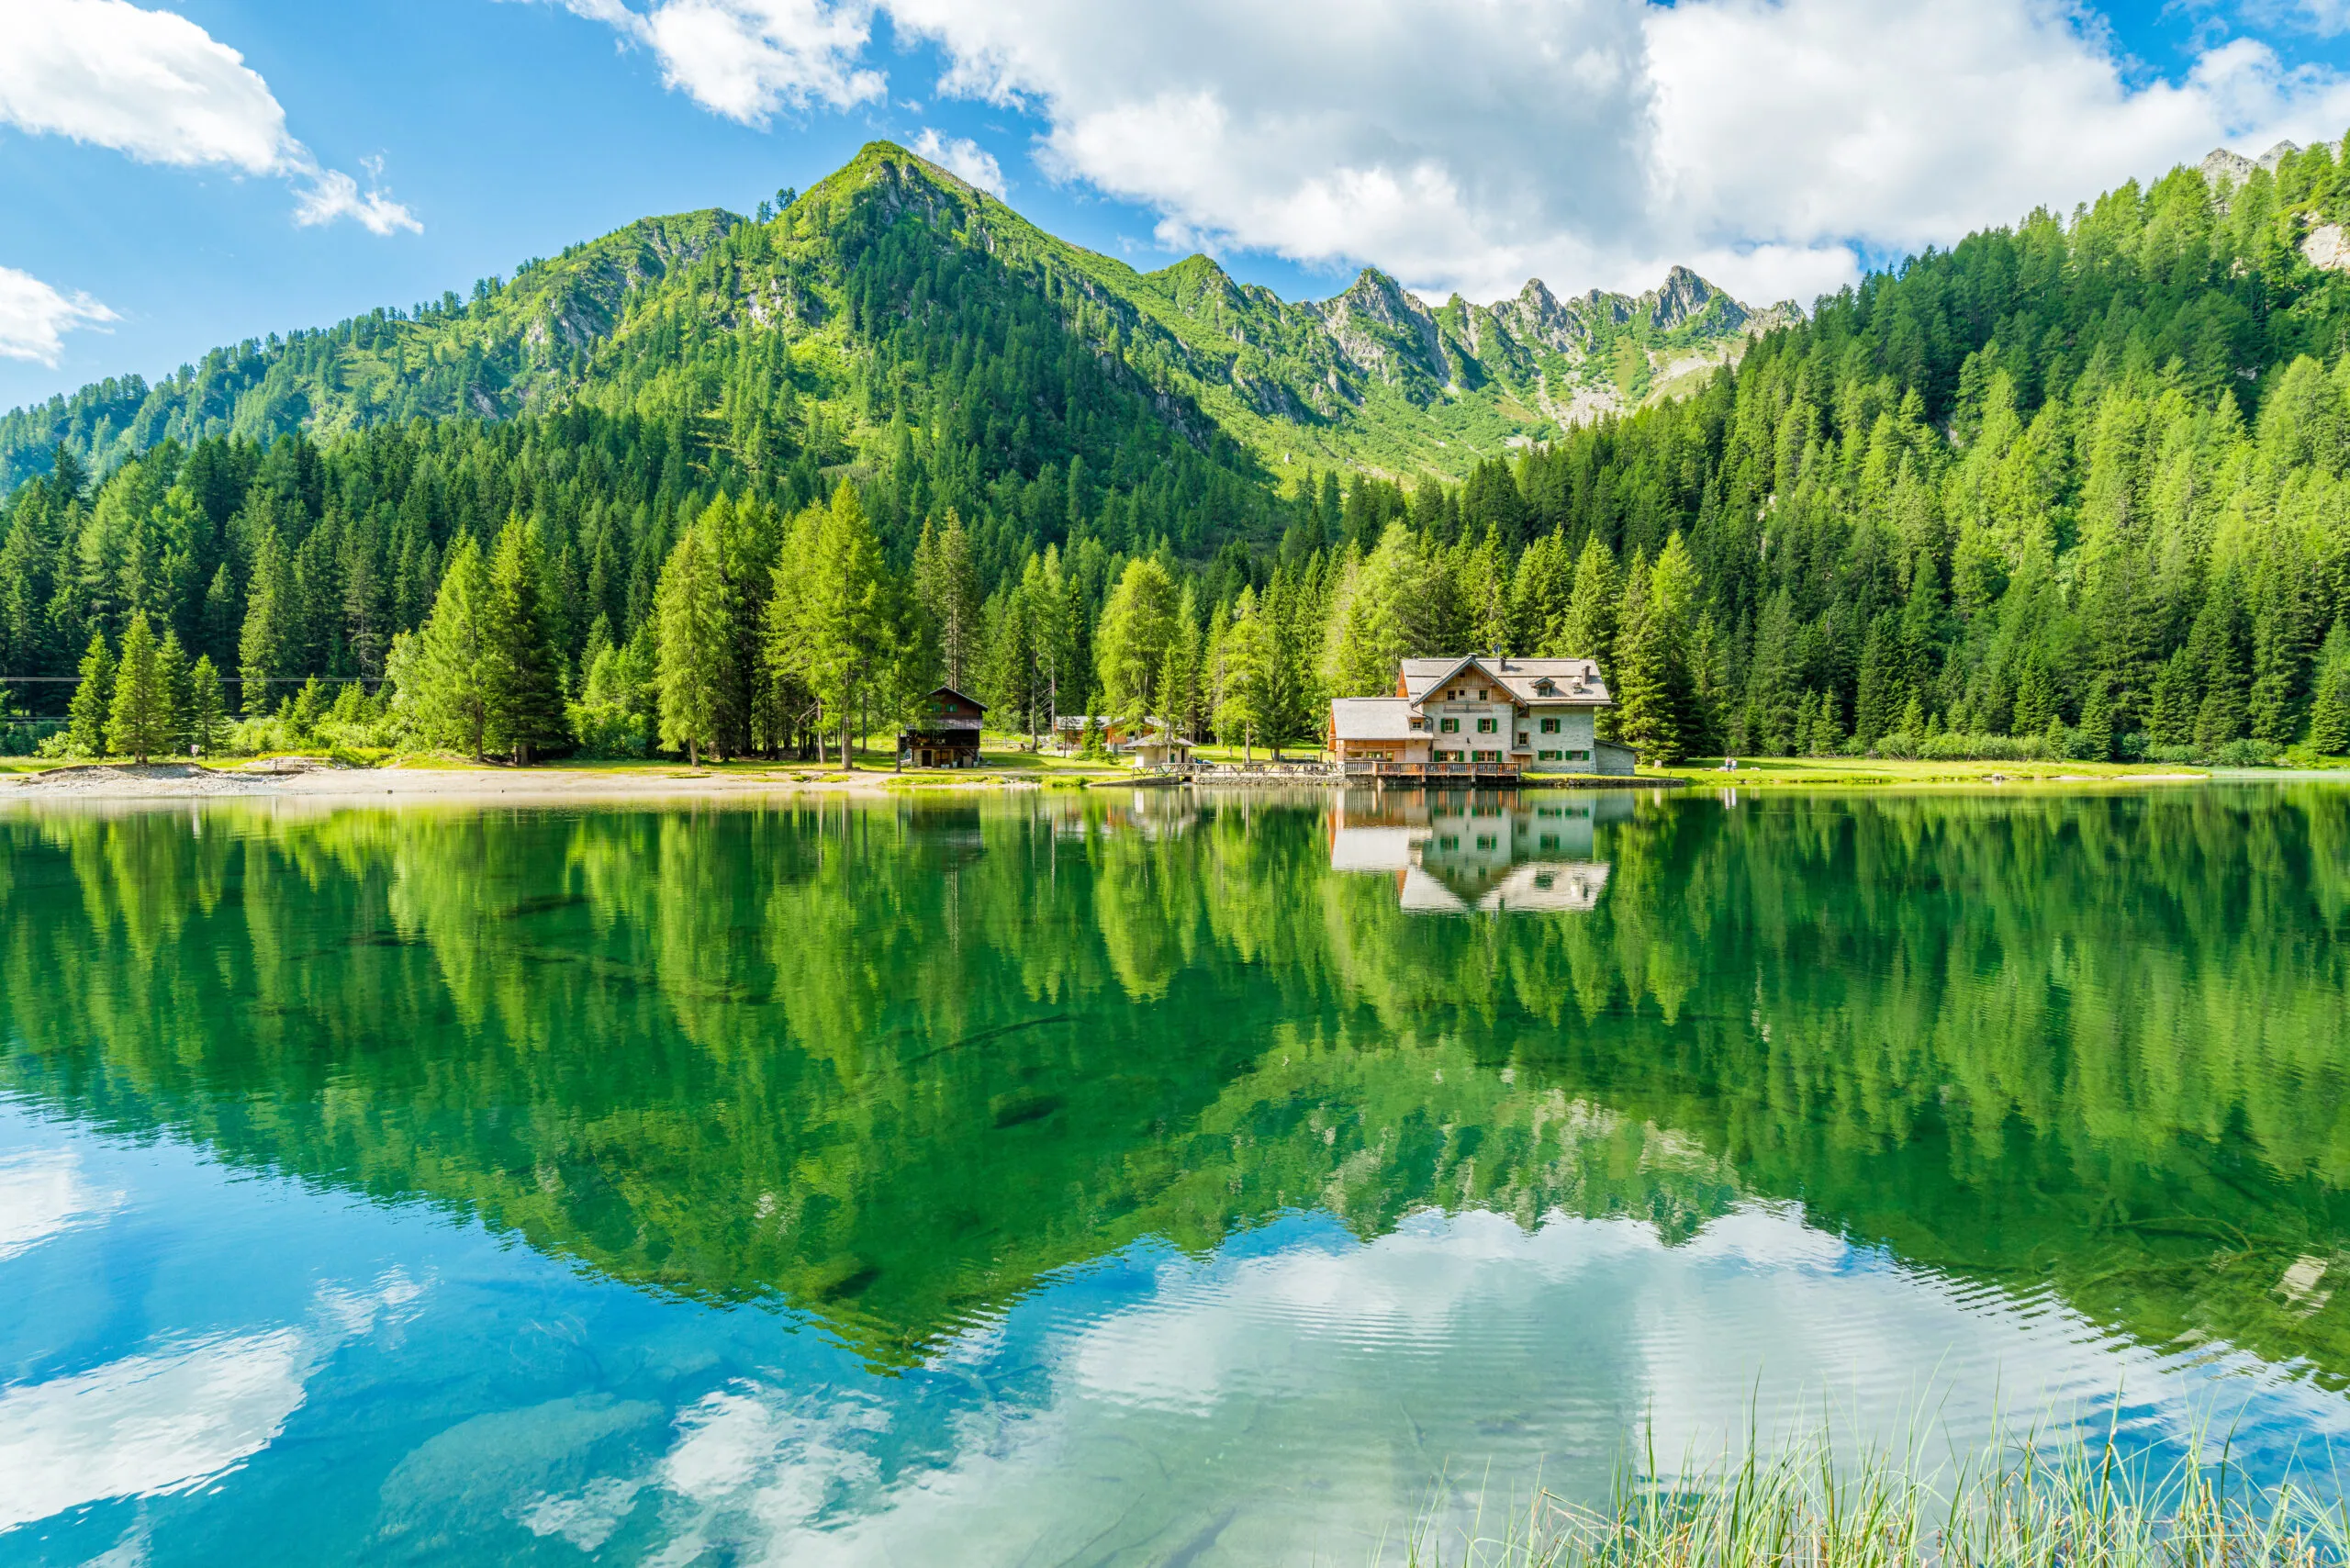 Idyllisk landskap ved Nambinosjøen, nær Madonna di Campiglio. Provinsen Trento, Trentino Alto Adige, Nord-Italia.